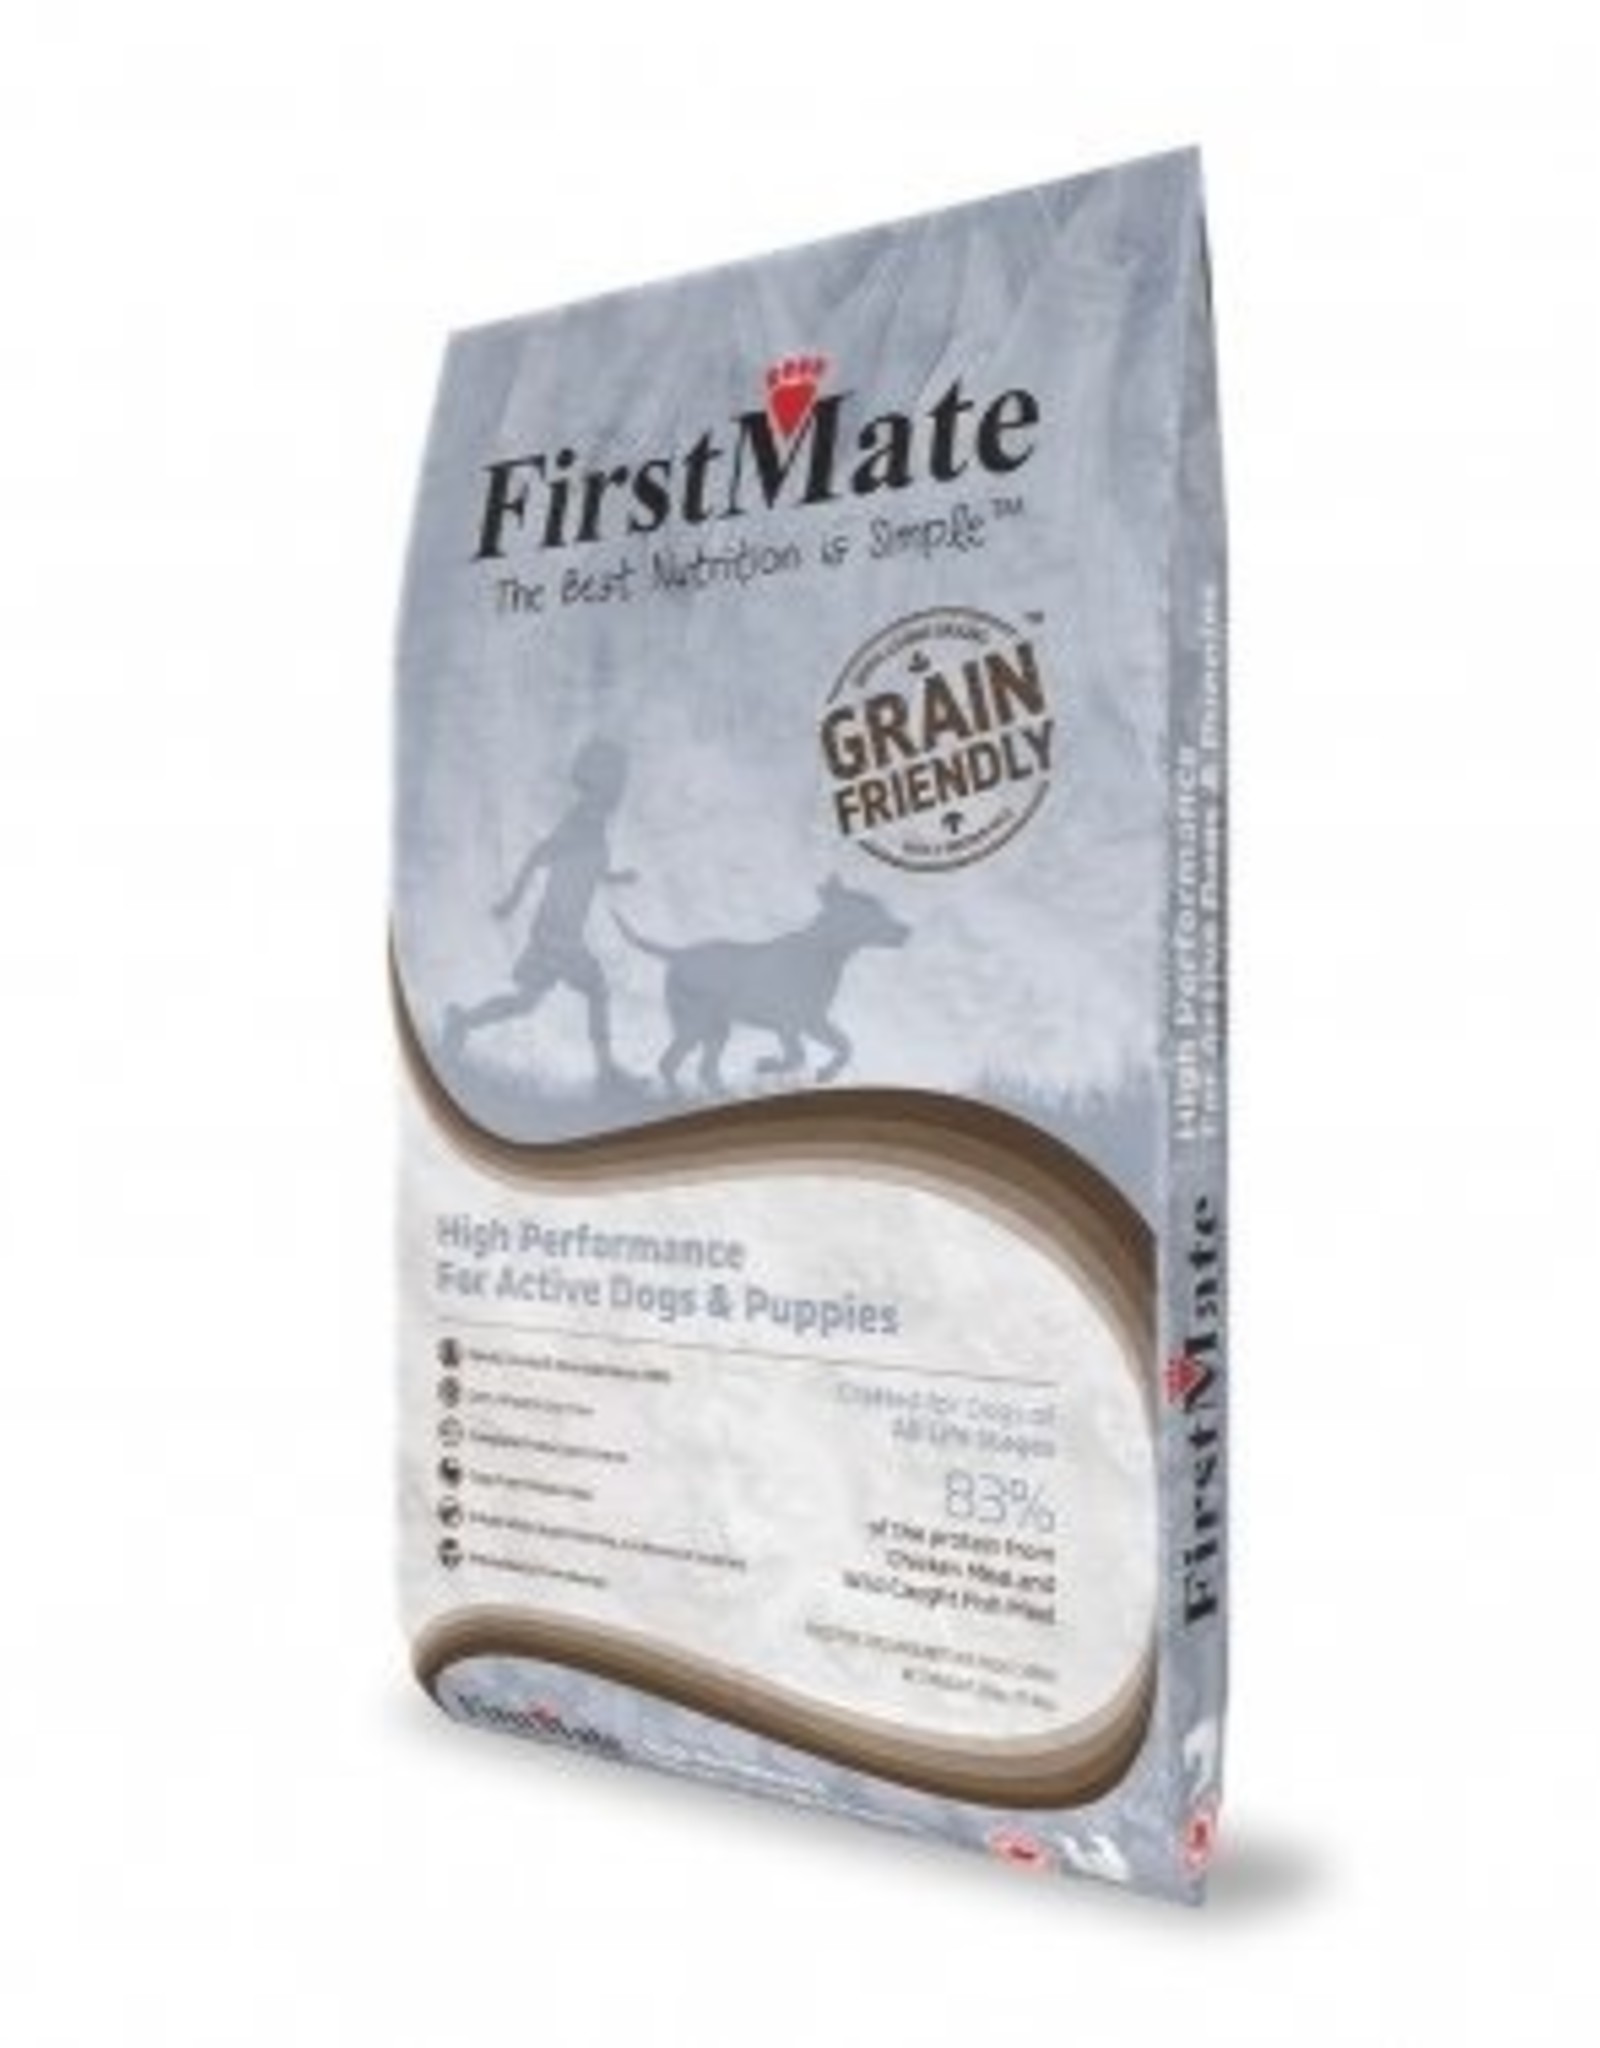 FirstMate FirstMate Grain Friendly High Performance & Puppy 25 lb